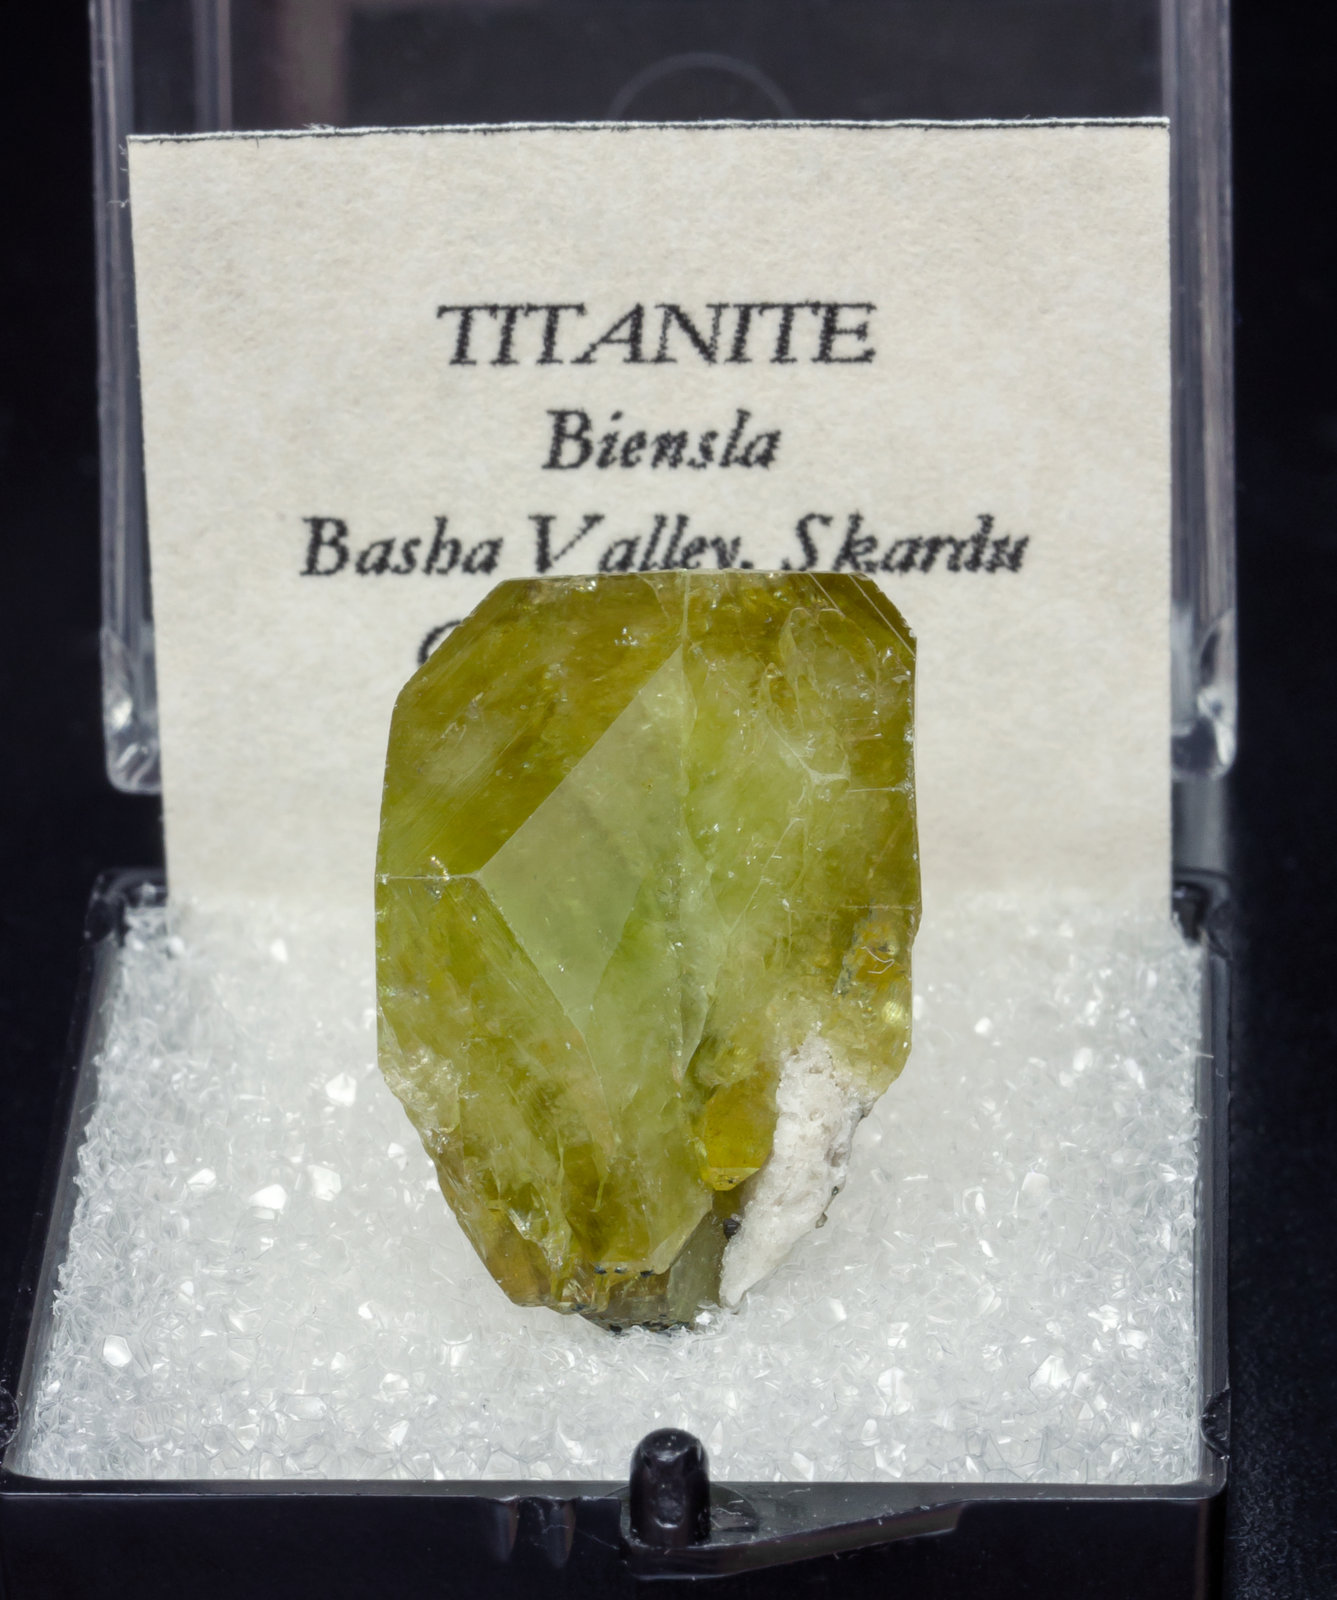 specimens/s_imagesAL4/Titanite-TD96AL4f1.jpg